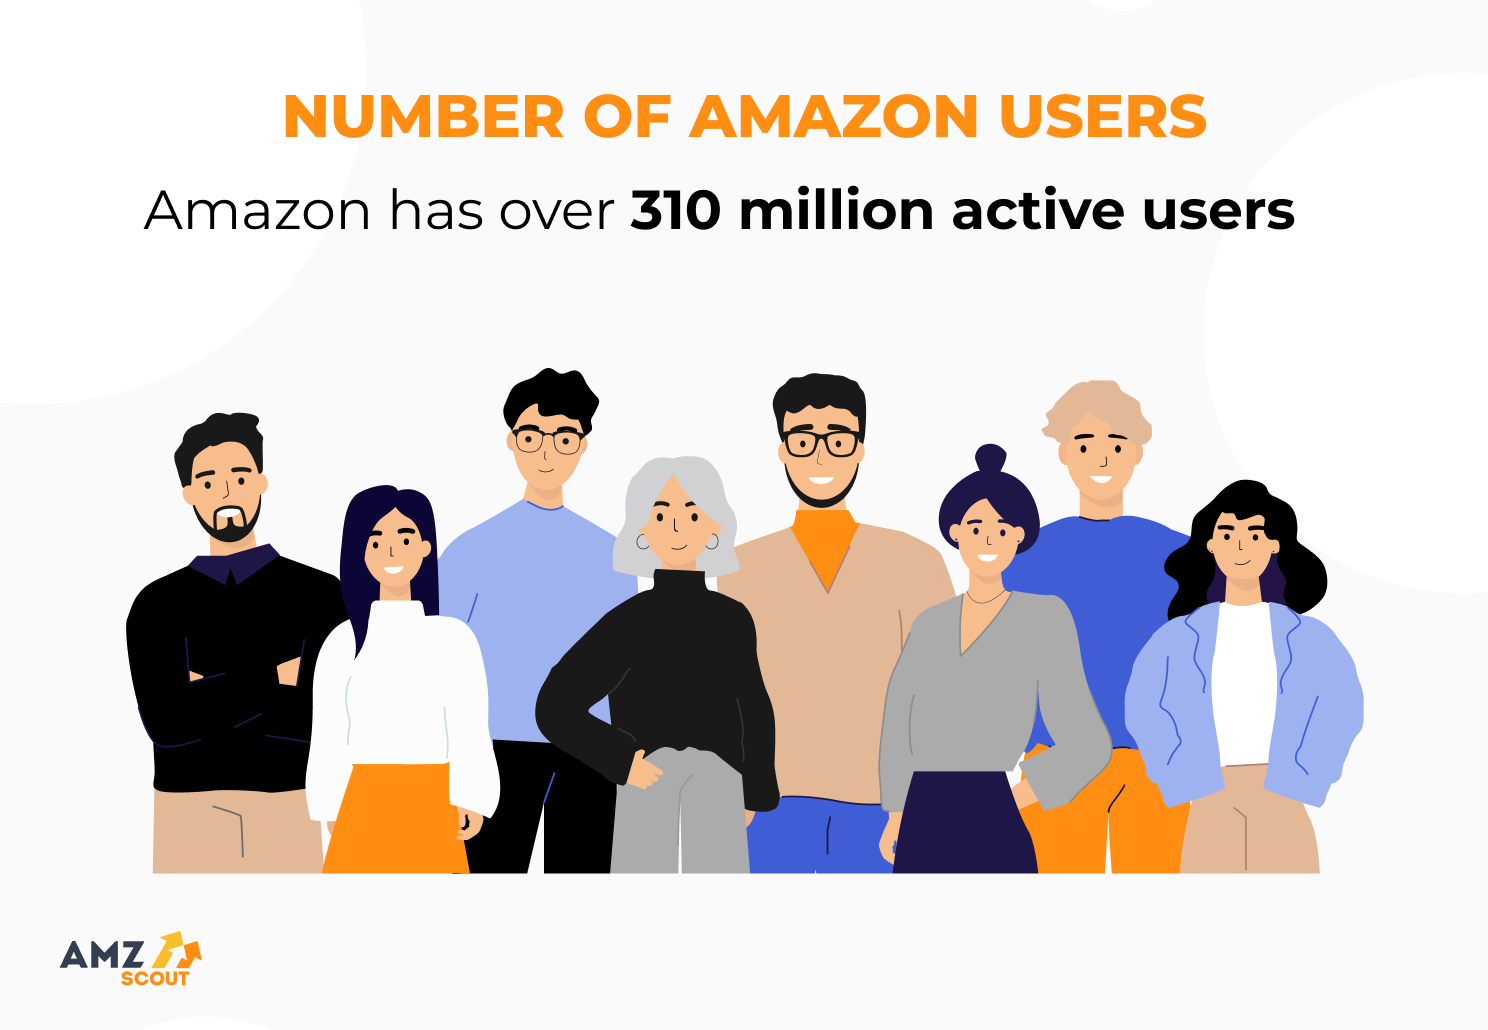 Amazon has over 310 million users according to statistics